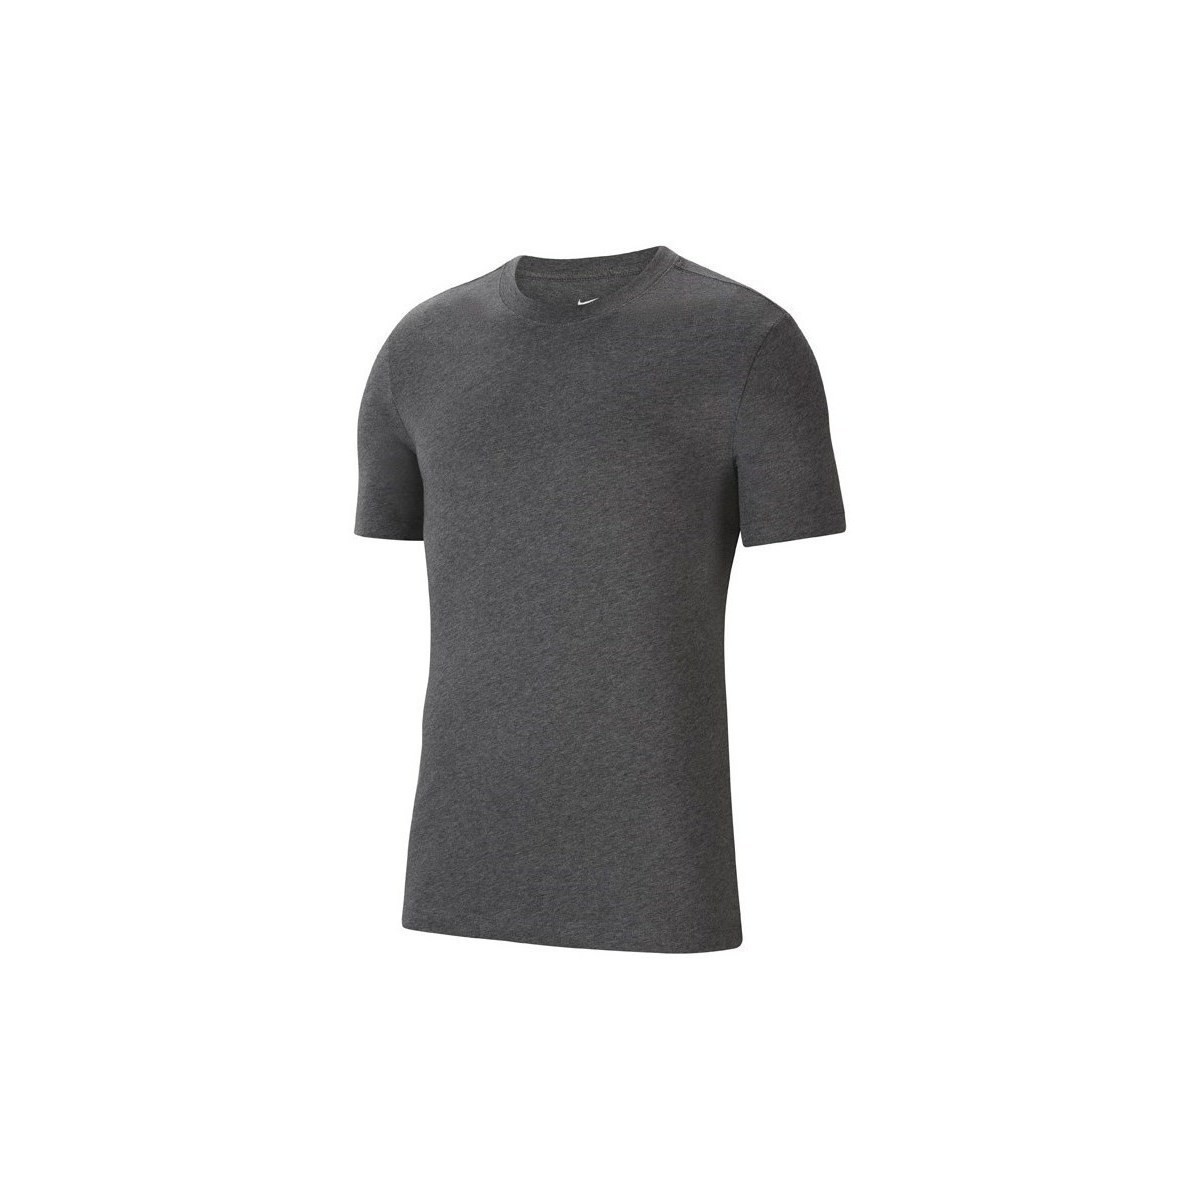 Kleidung Herren T-Shirts Nike Park 20 Grau